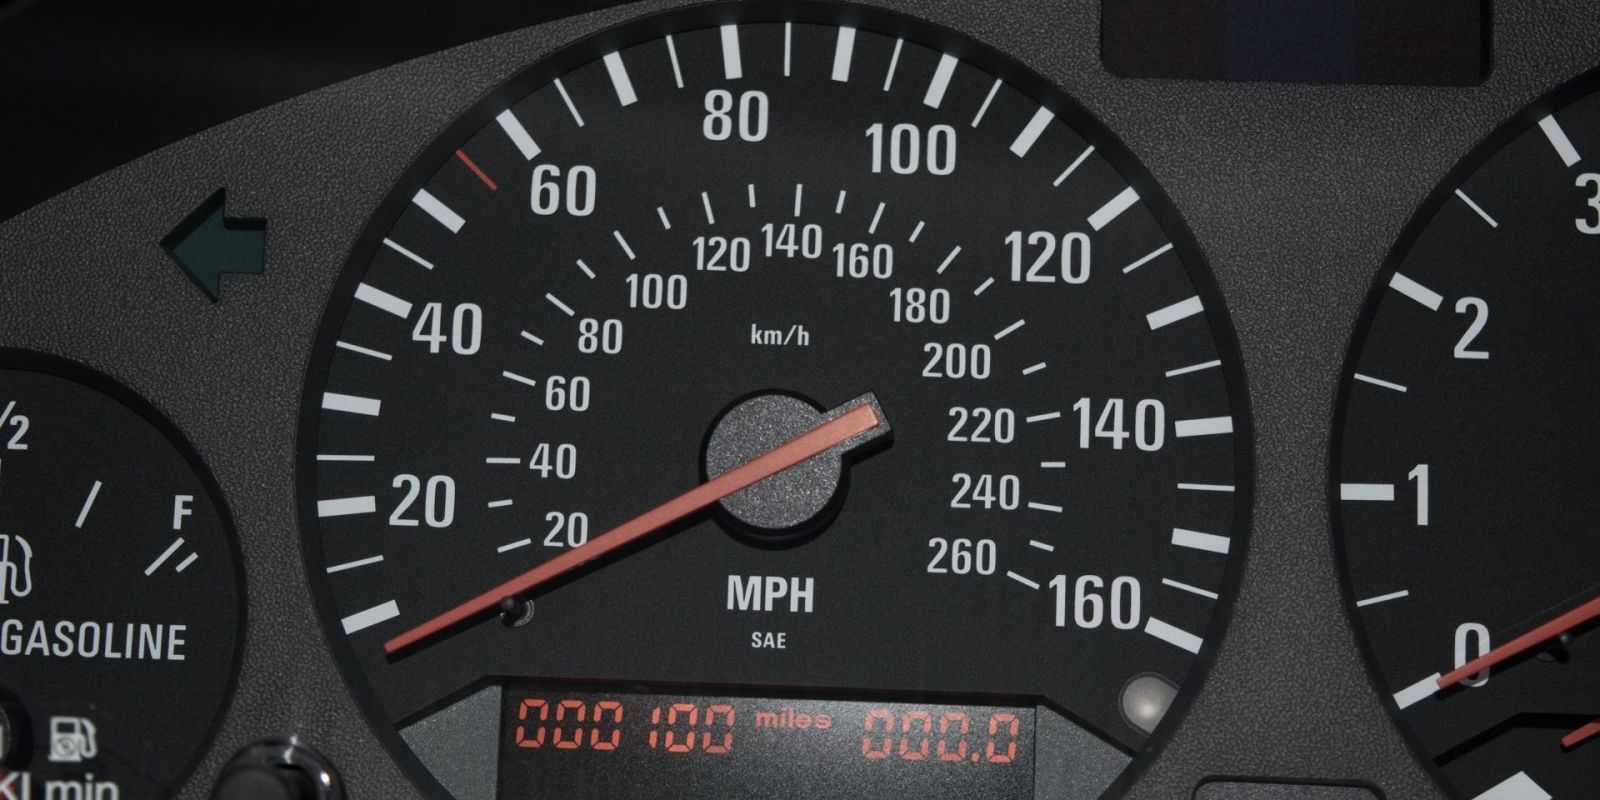 1994 ford engine codes digital odometer